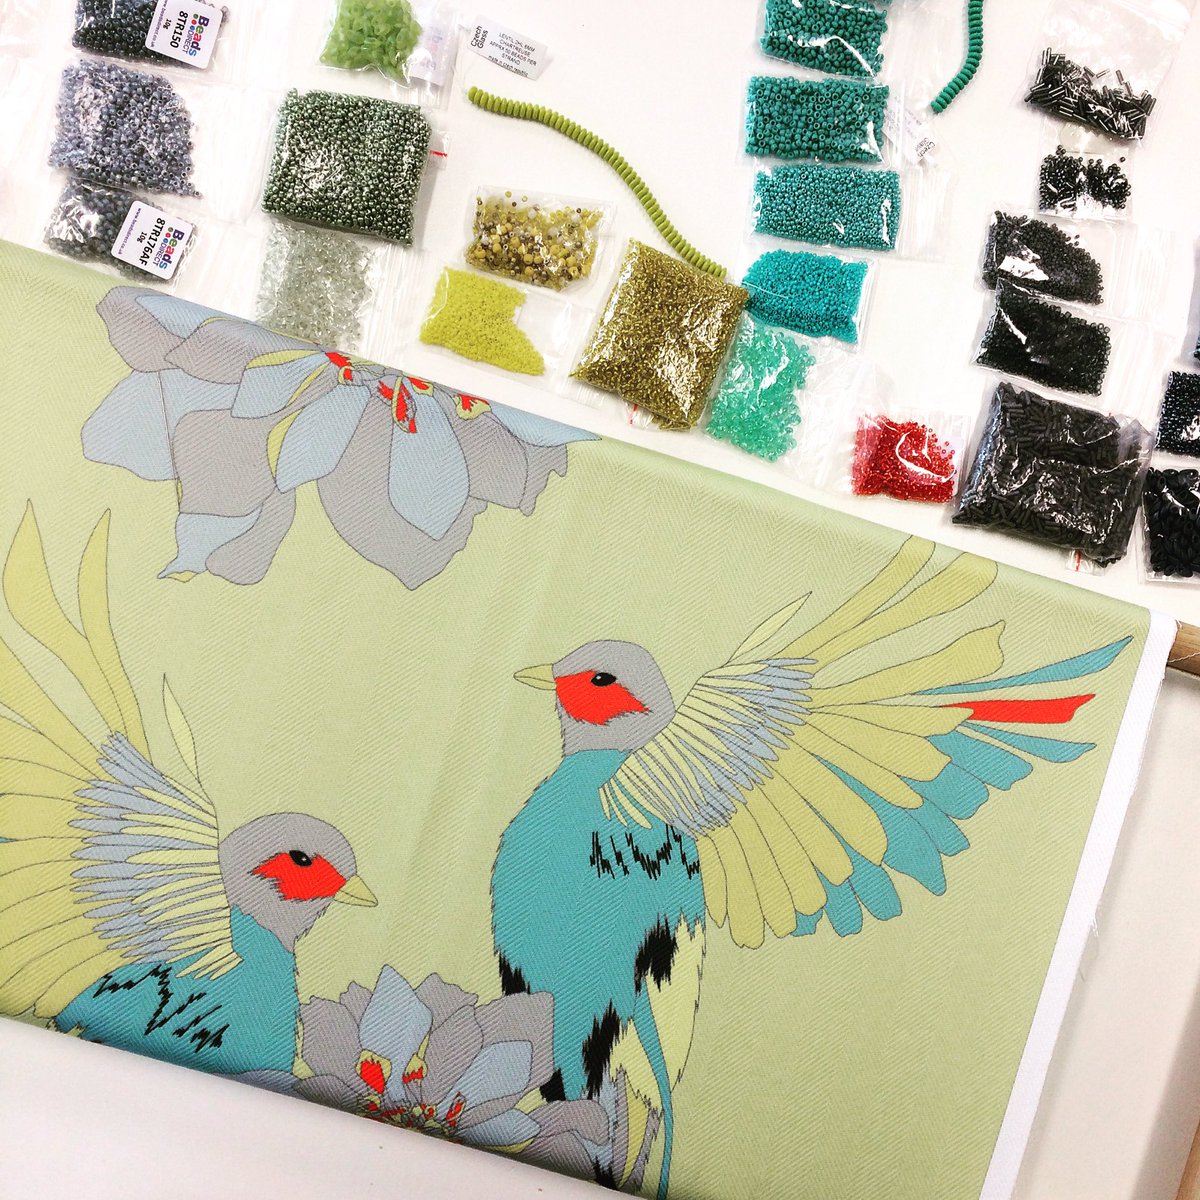 Getting ready to embellish!! ✨ #bead #embellish #stitch #textiles #design #birds #flowers #draw #print